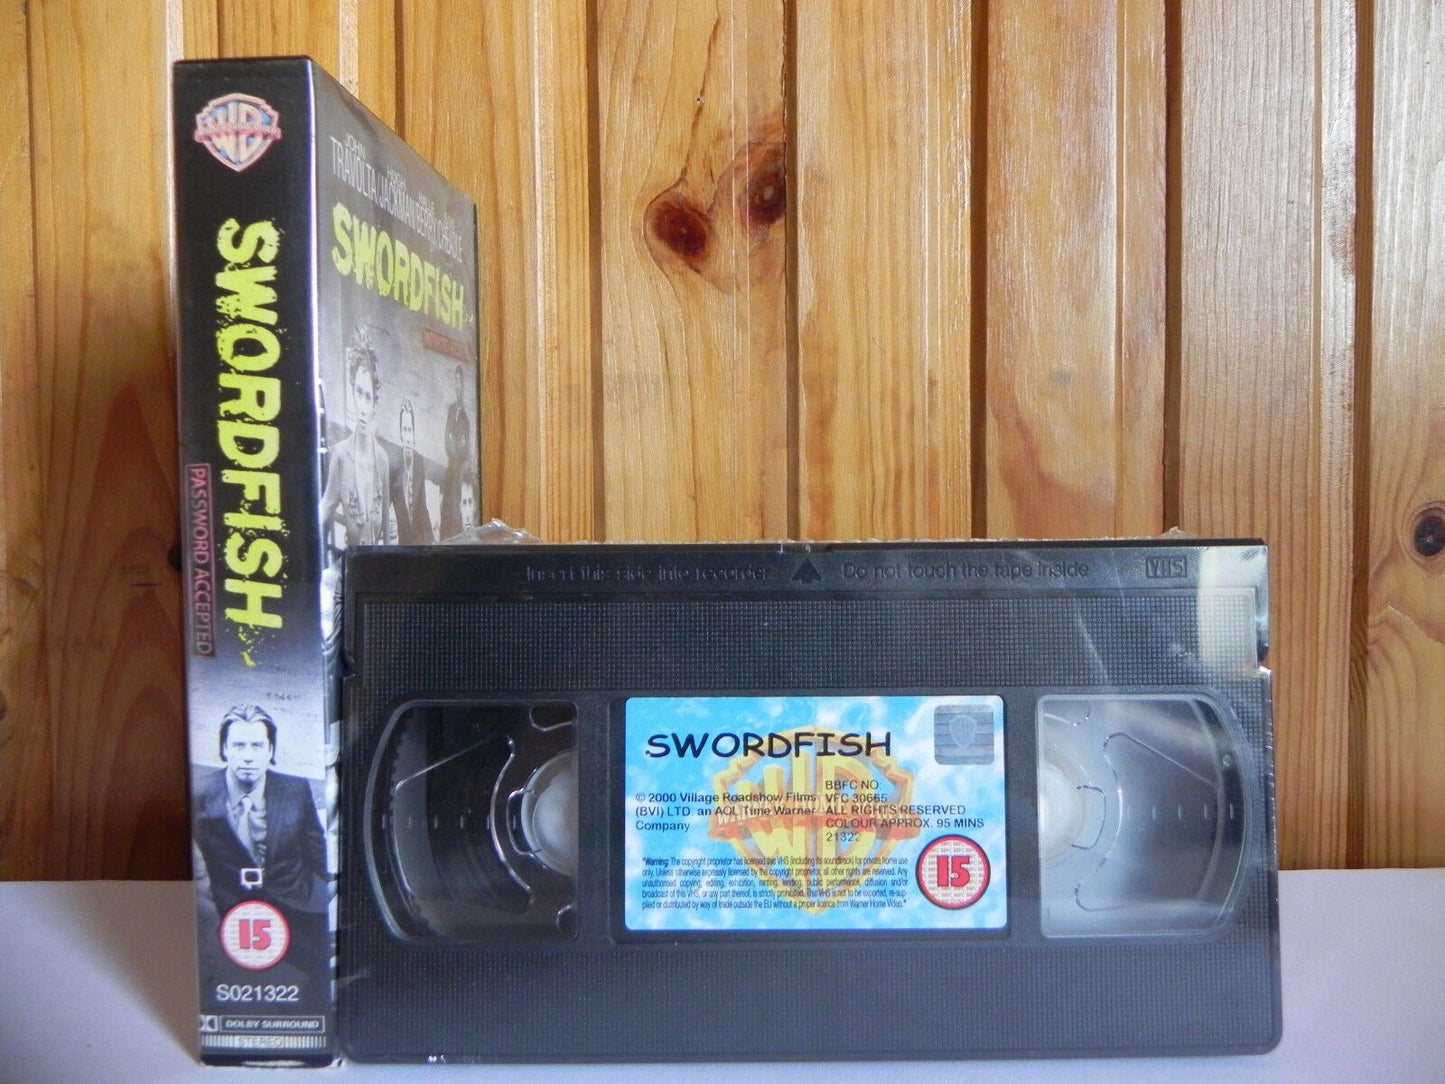 Swordfish (2001); [Brand New Sealed] Action Thriller - John Travolta - Pal VHS-